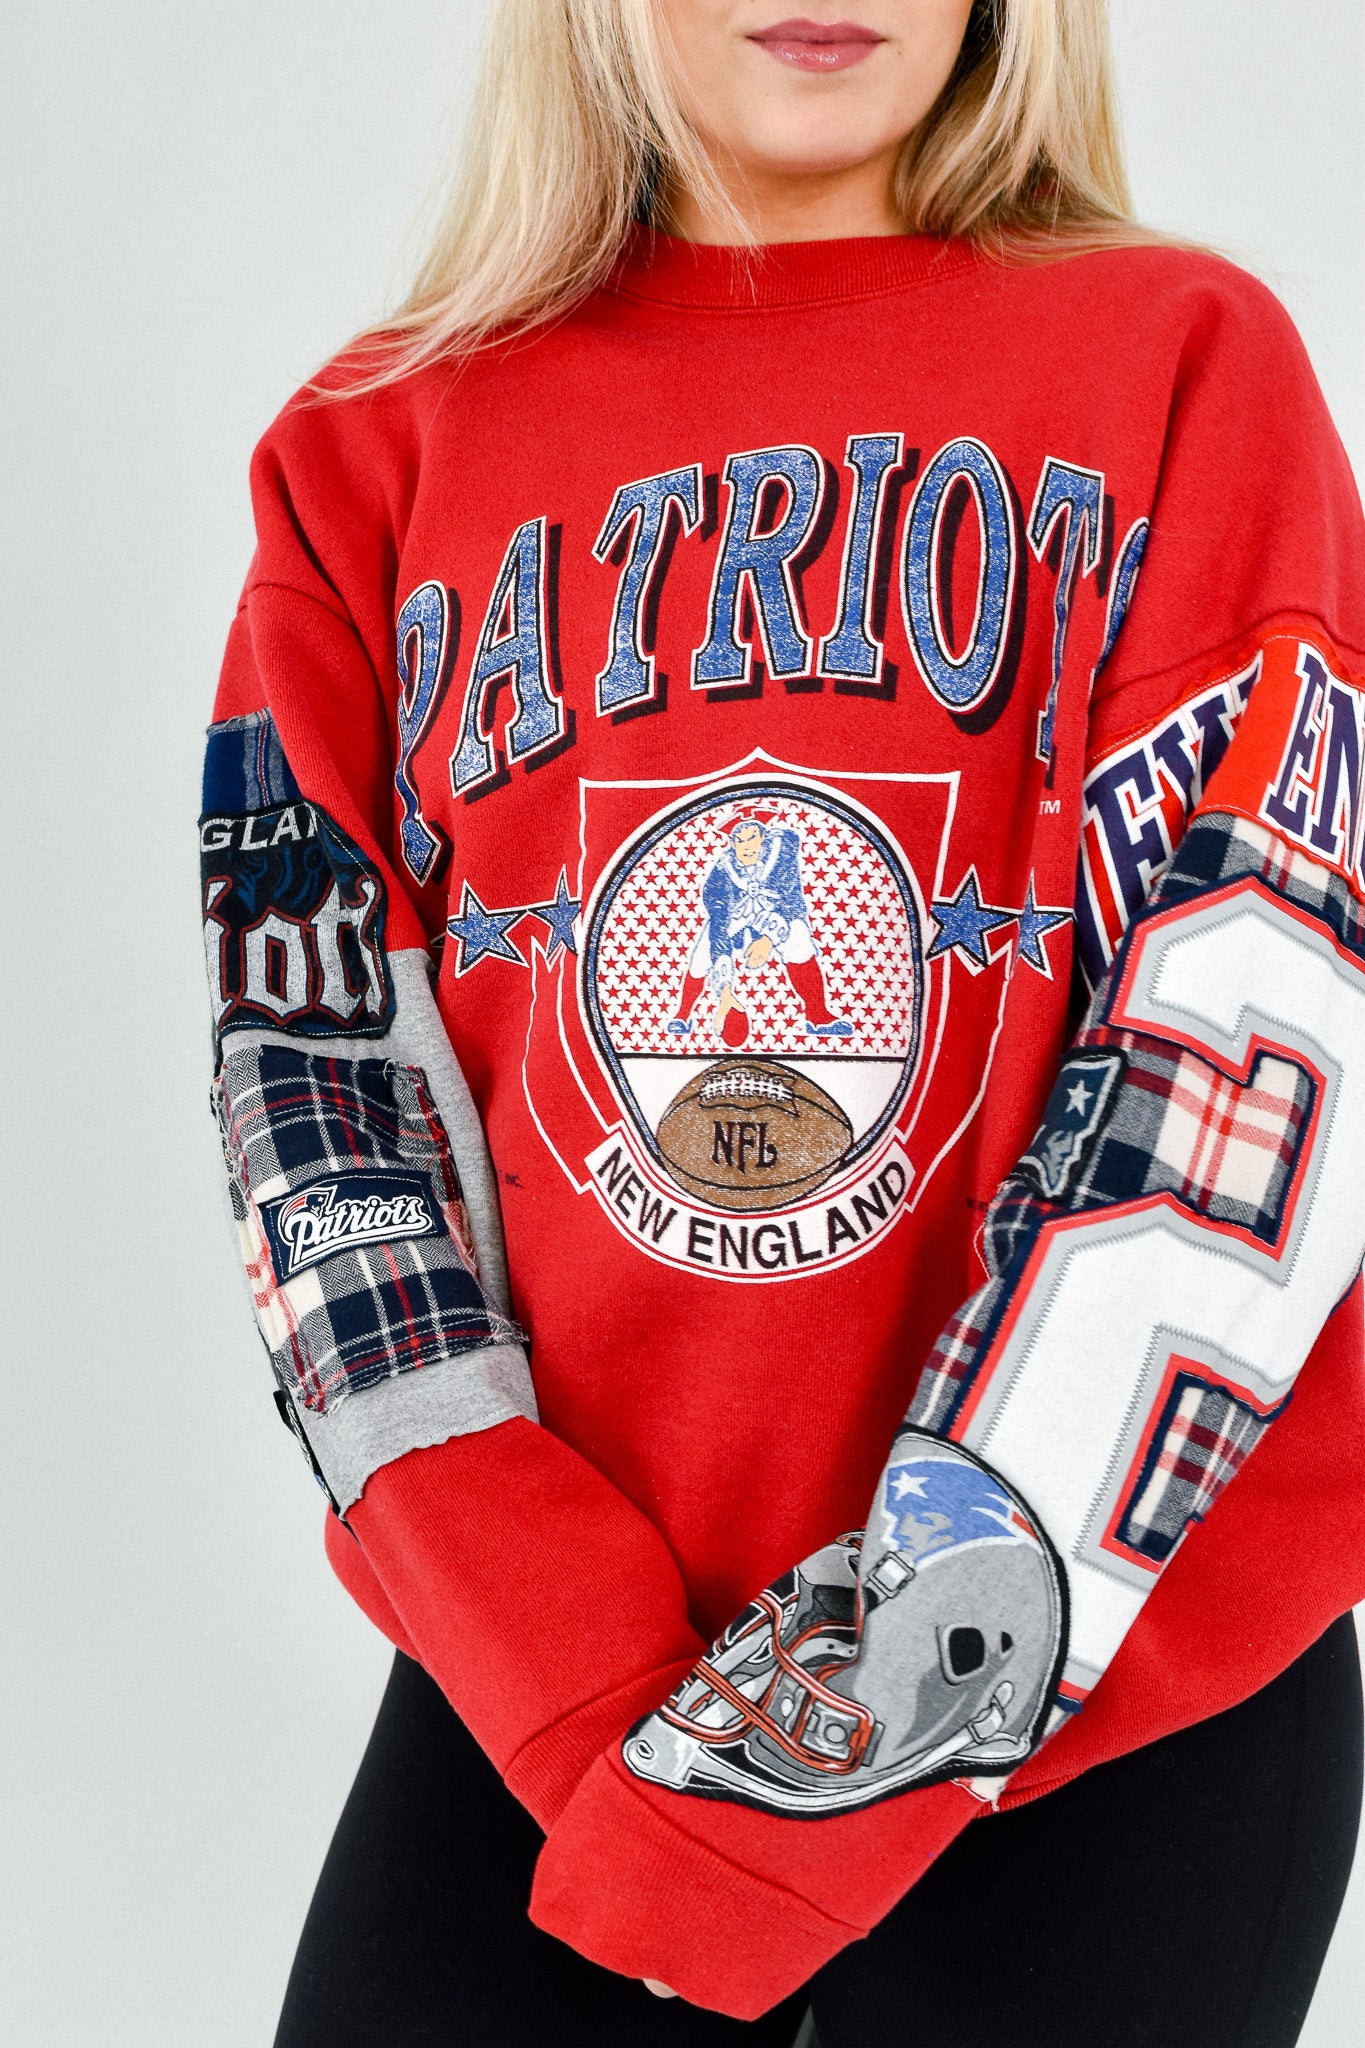 Upcycled Patriots Patchwork Sweatshirt